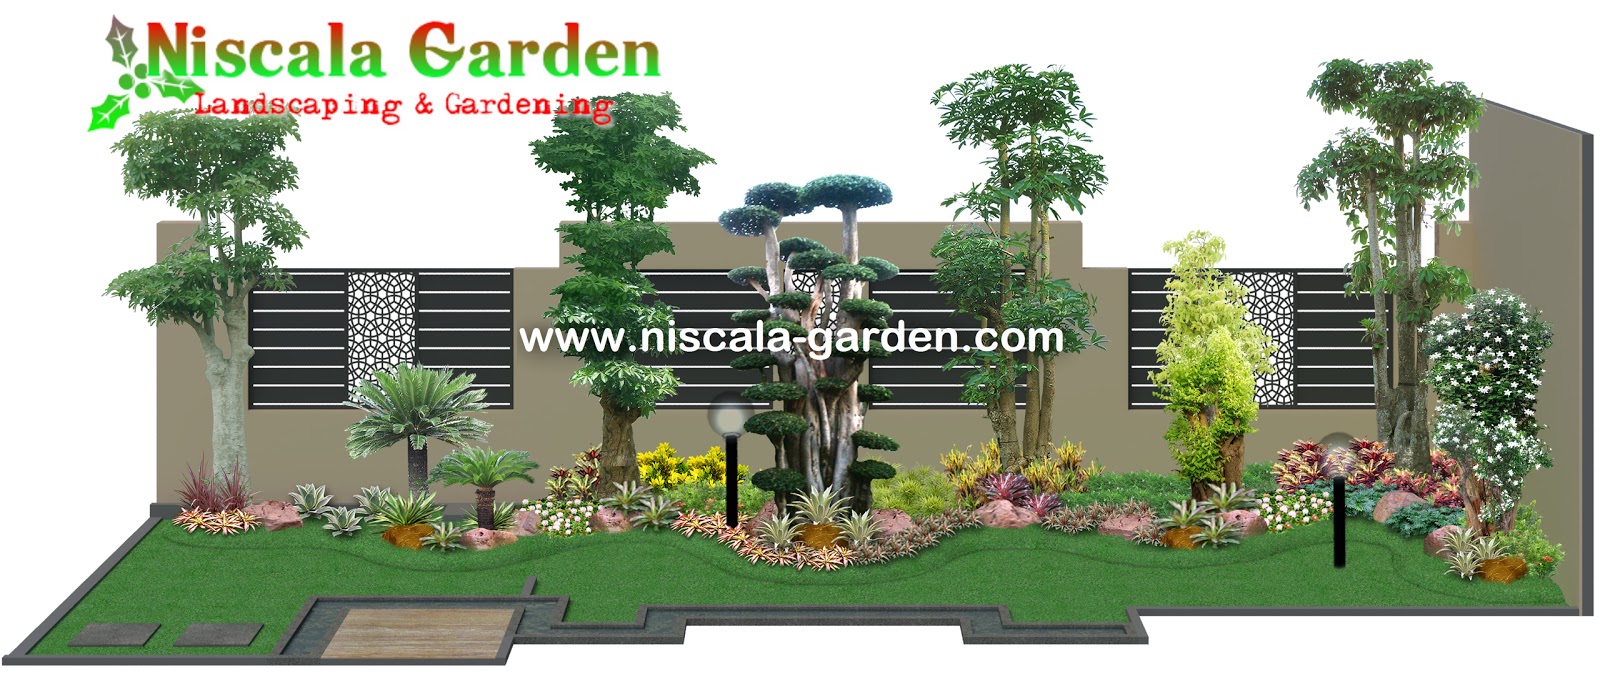 45 Desain Taman Tropis Modern Jasa Tukang Taman Surabaya 